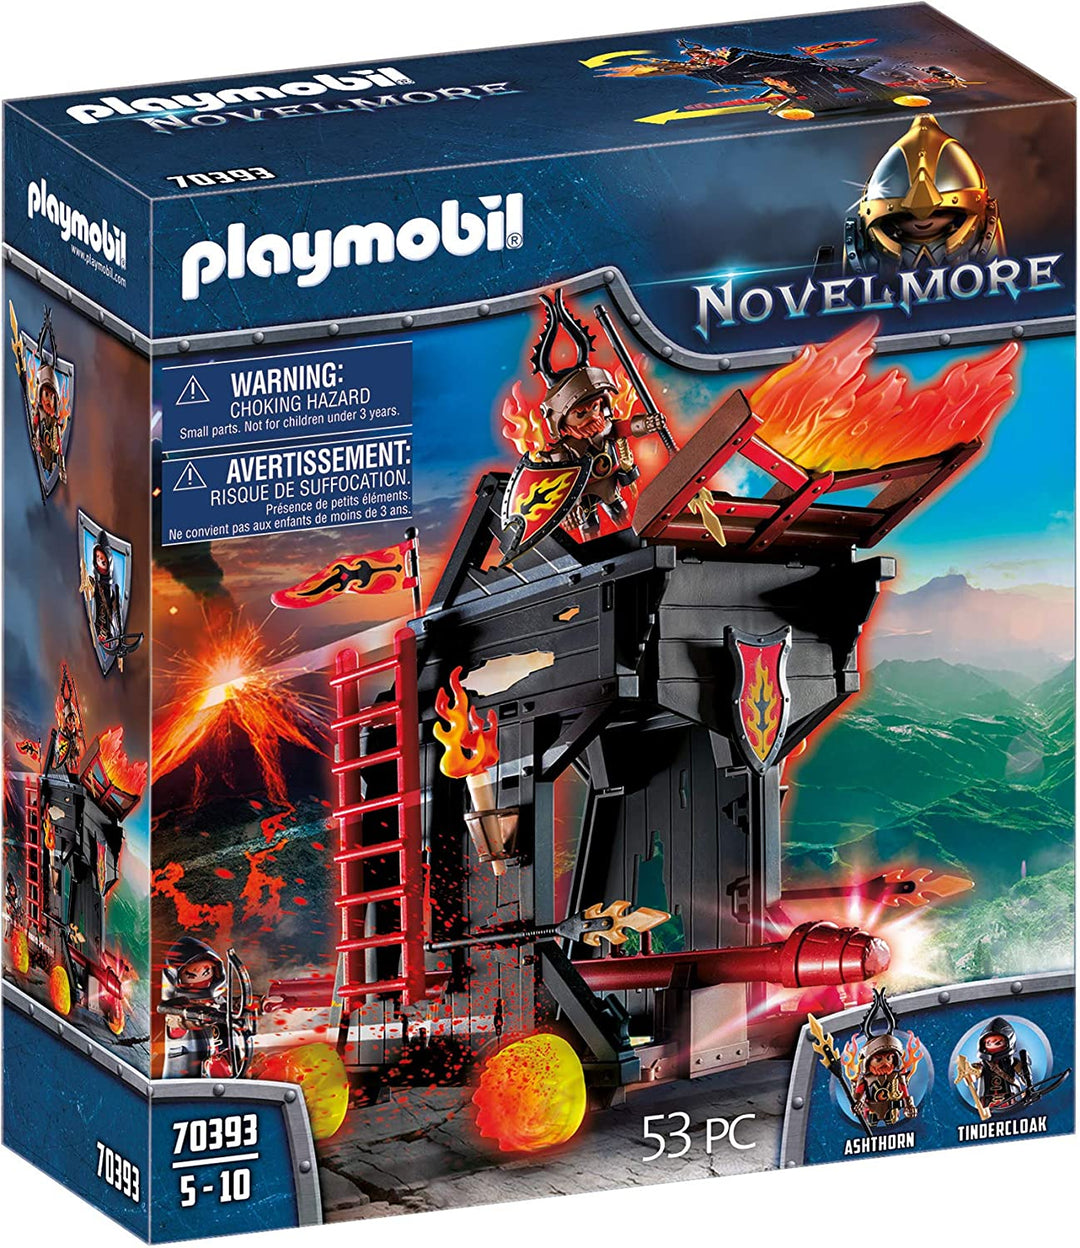 Playmobil 70393 Novelmore Knights Burnham Raiders Fire Ram, for Children Ages 4-10